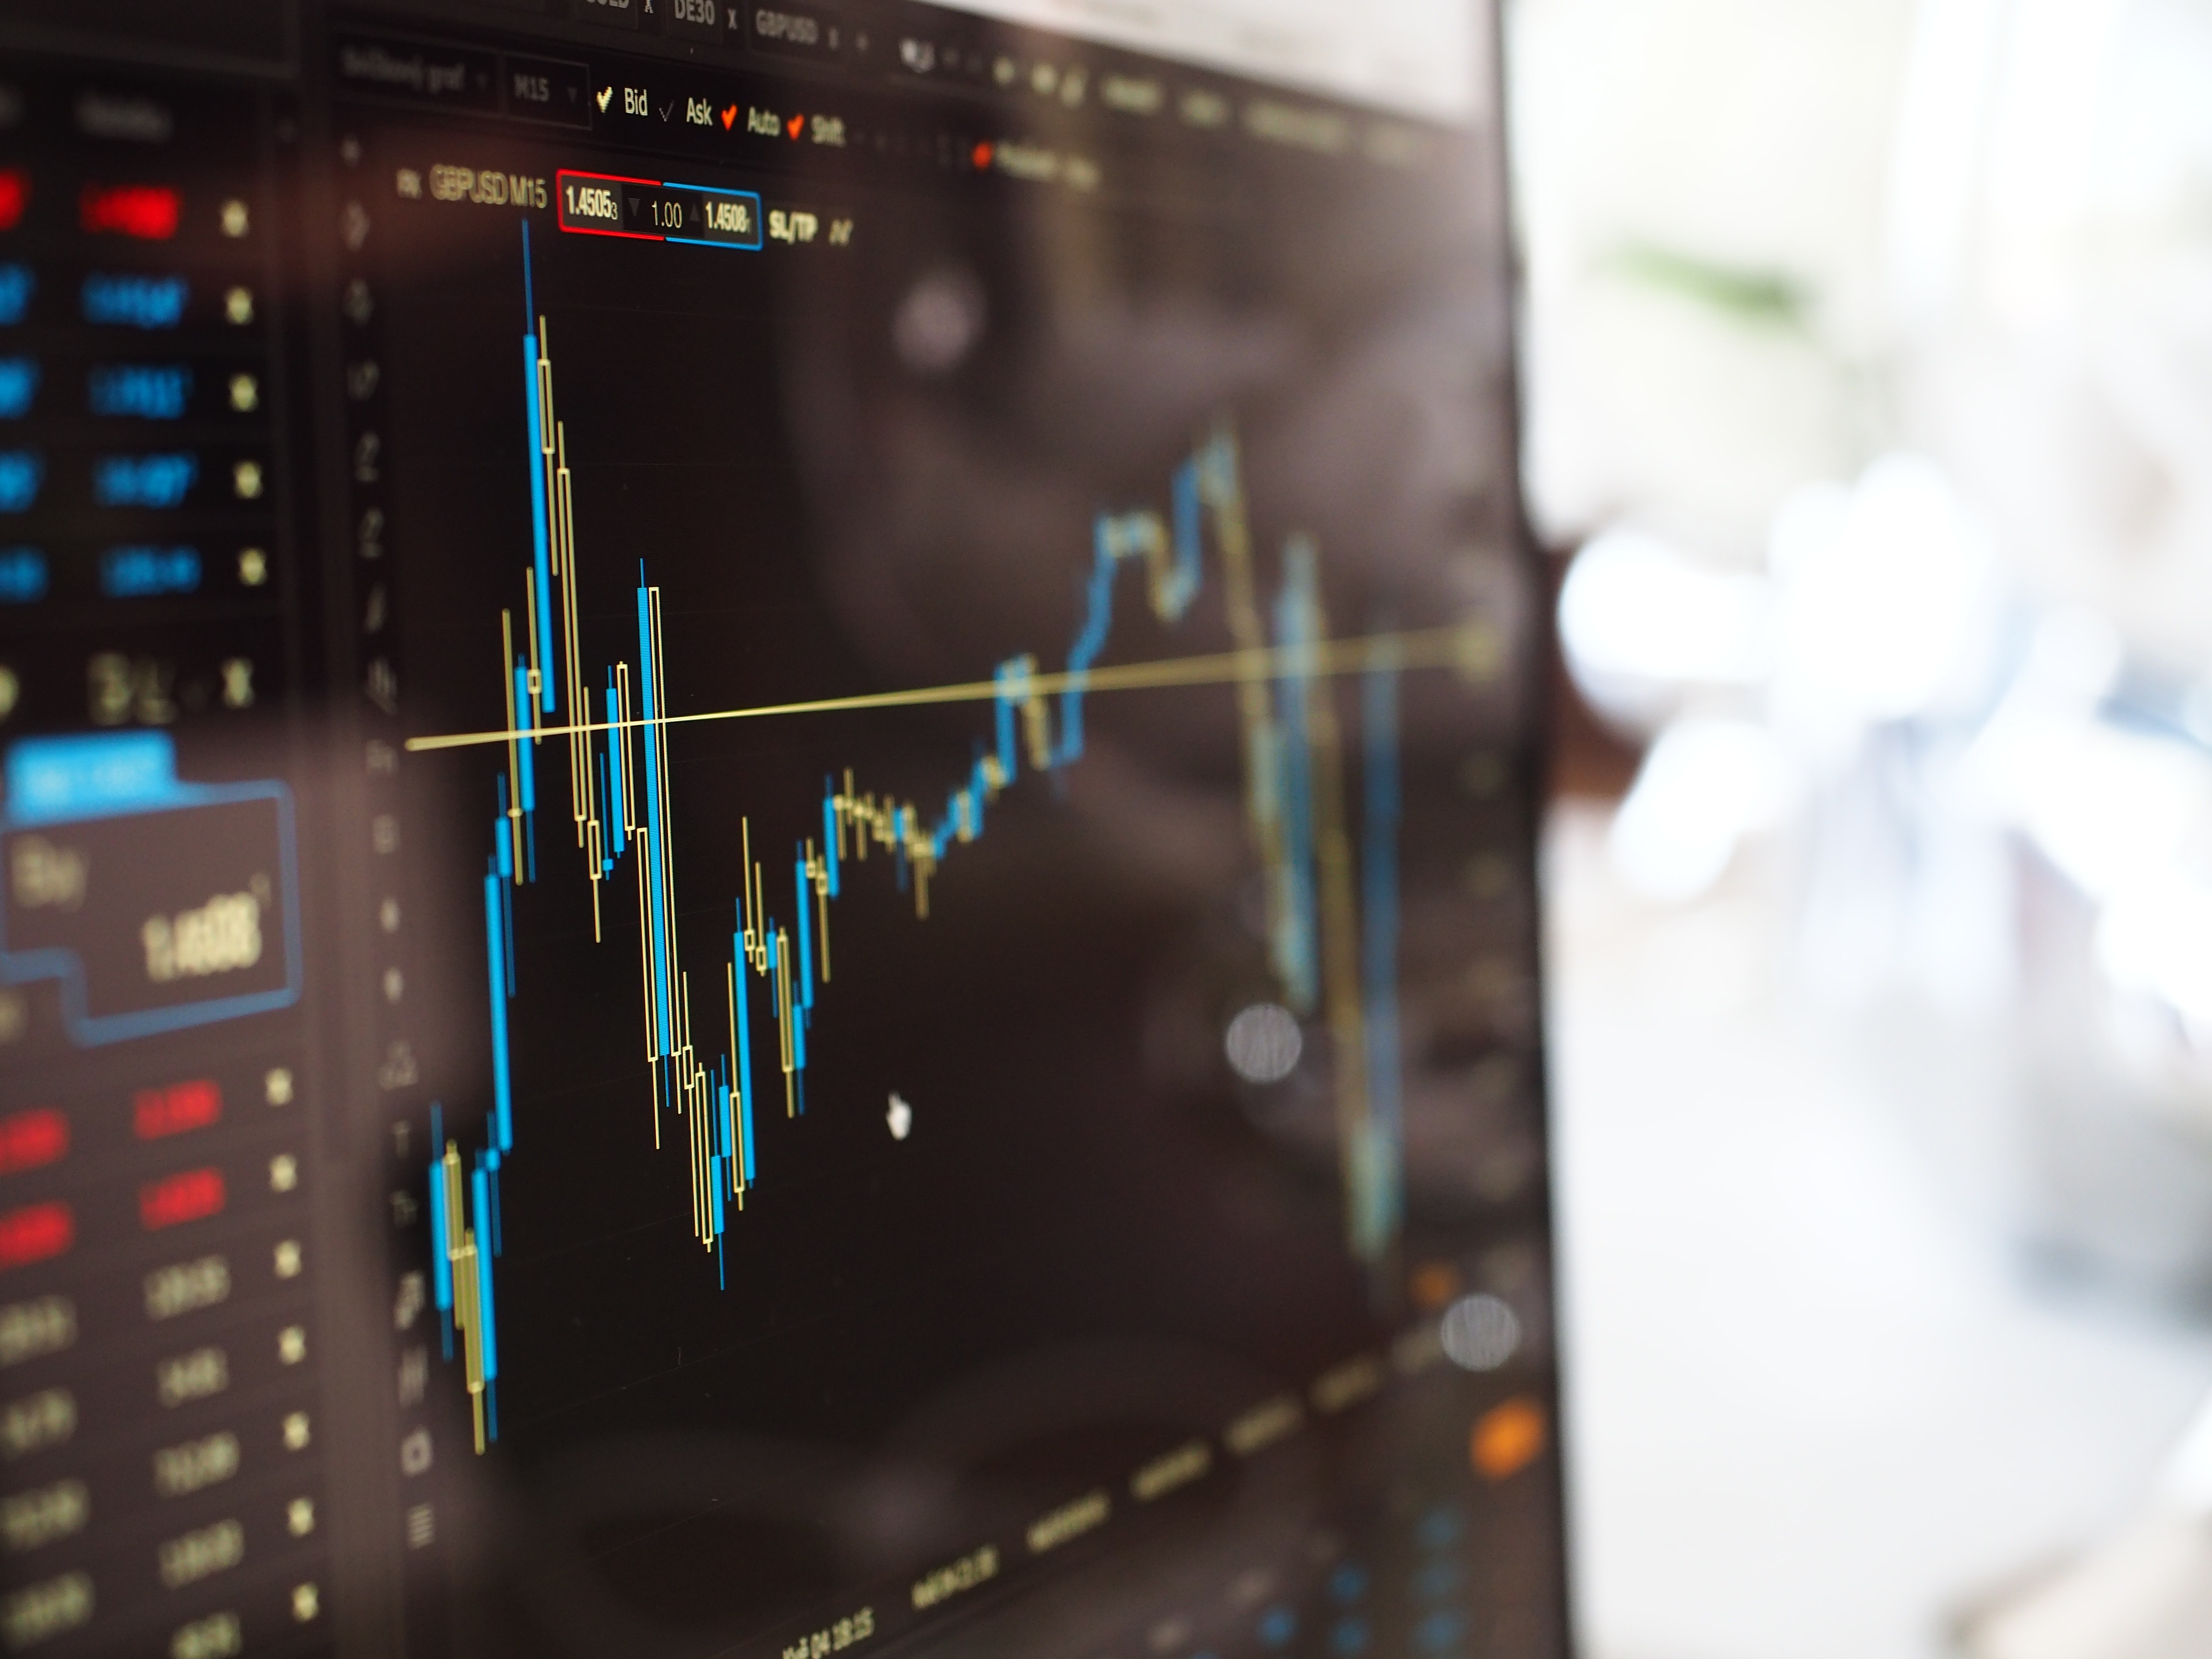 A computer screen showing a stock market graph